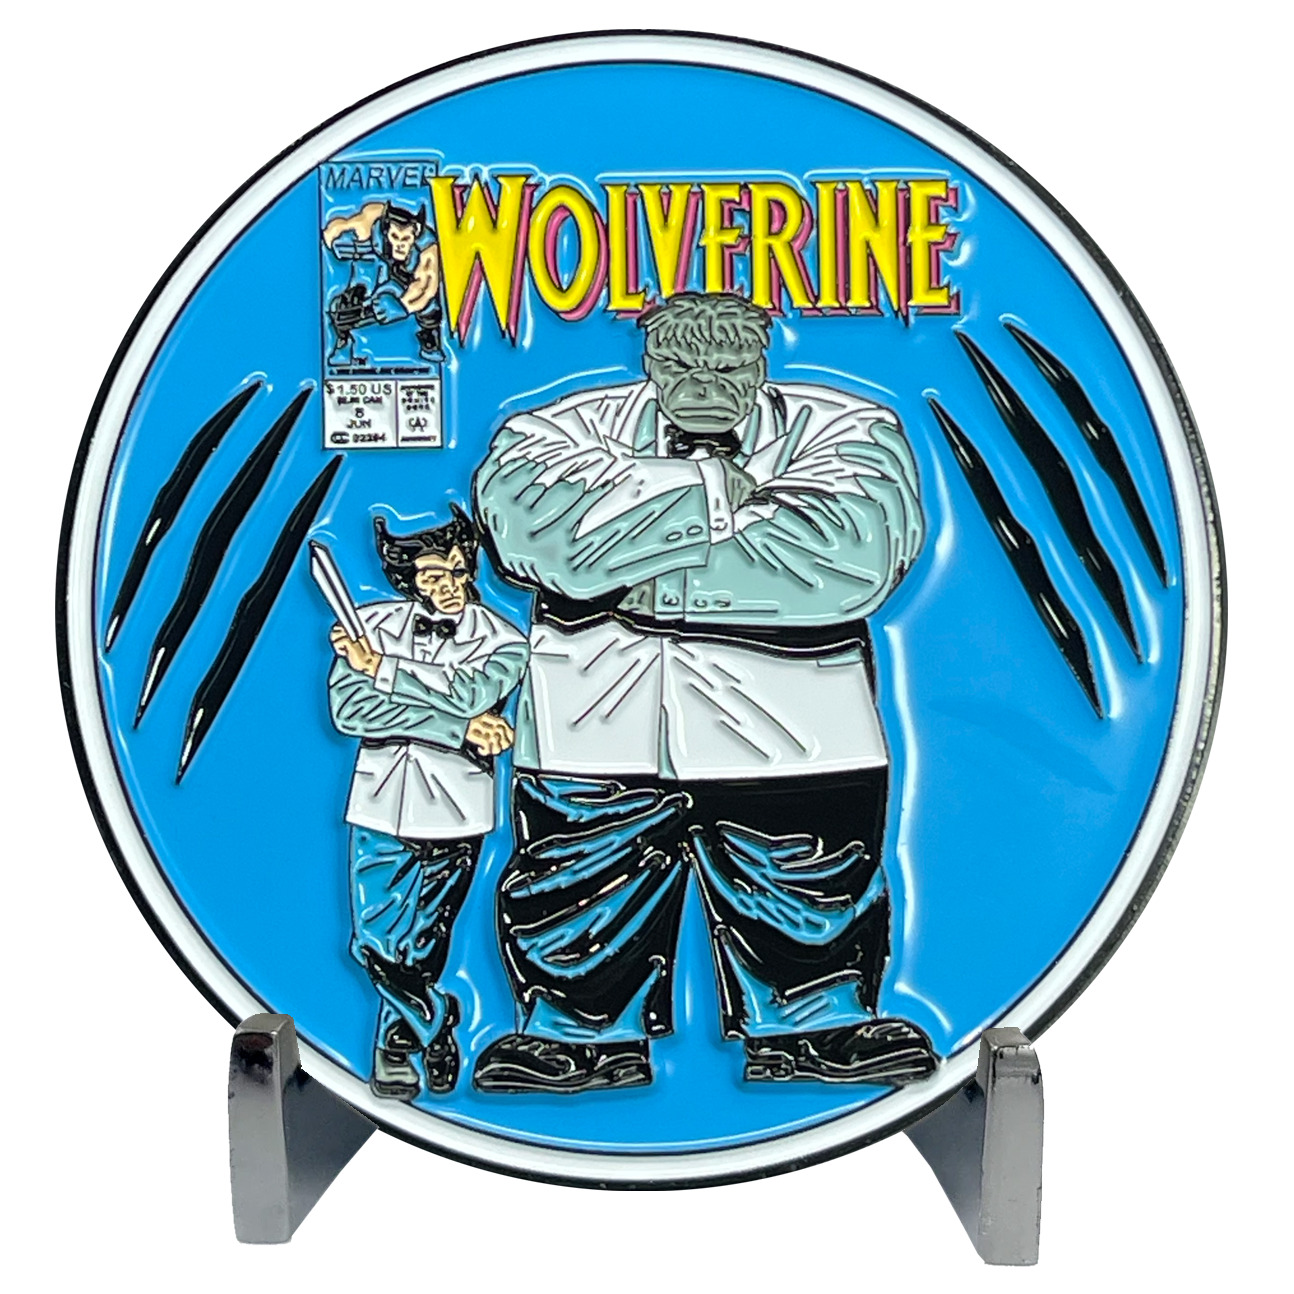 Marvel Wolverine Comic Book inspired Alaska Police Challenge Coin BL11-003